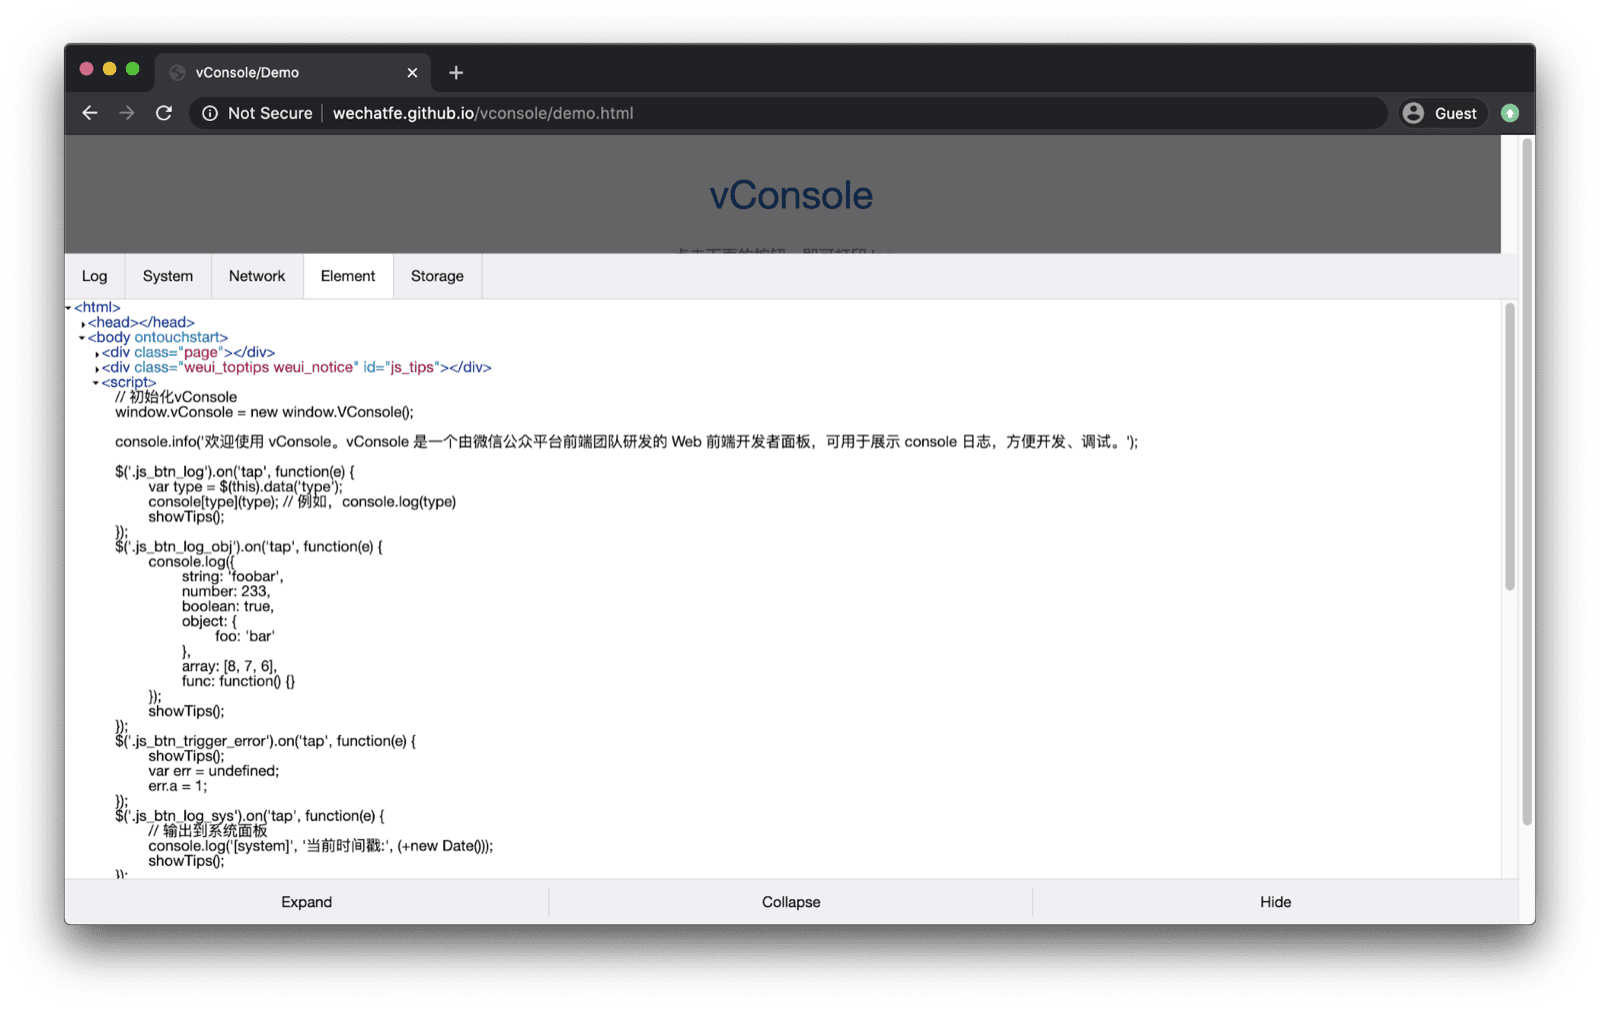 VConsole 試用版應用程式。Console 會在底部開啟，並顯示記錄、系統、網路、元素和儲存空間的分頁標籤。